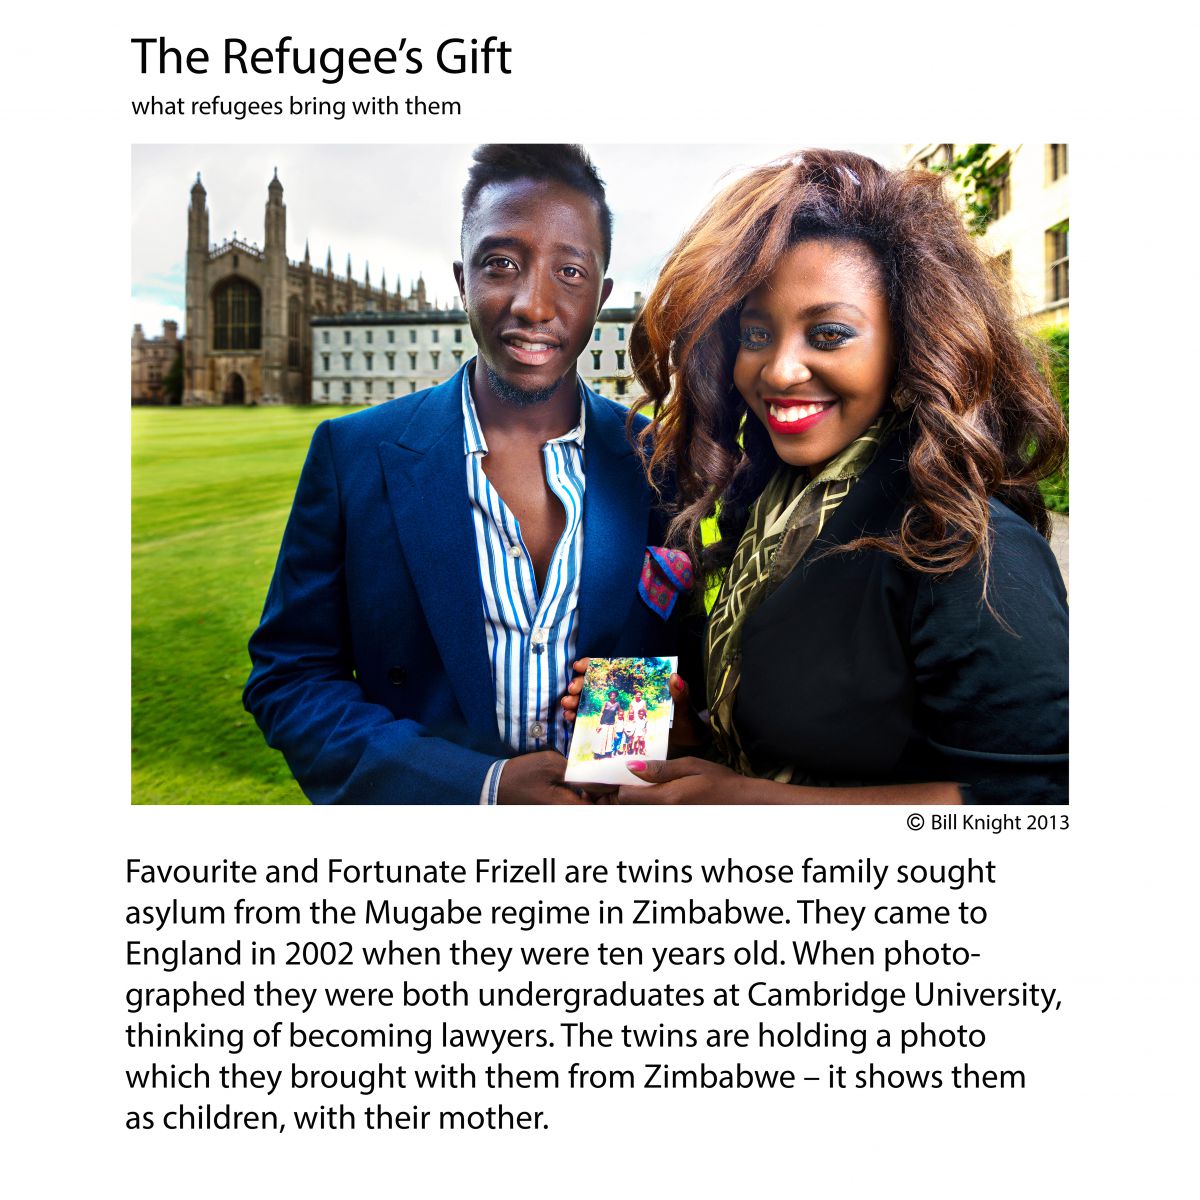 The Refugee's Gift